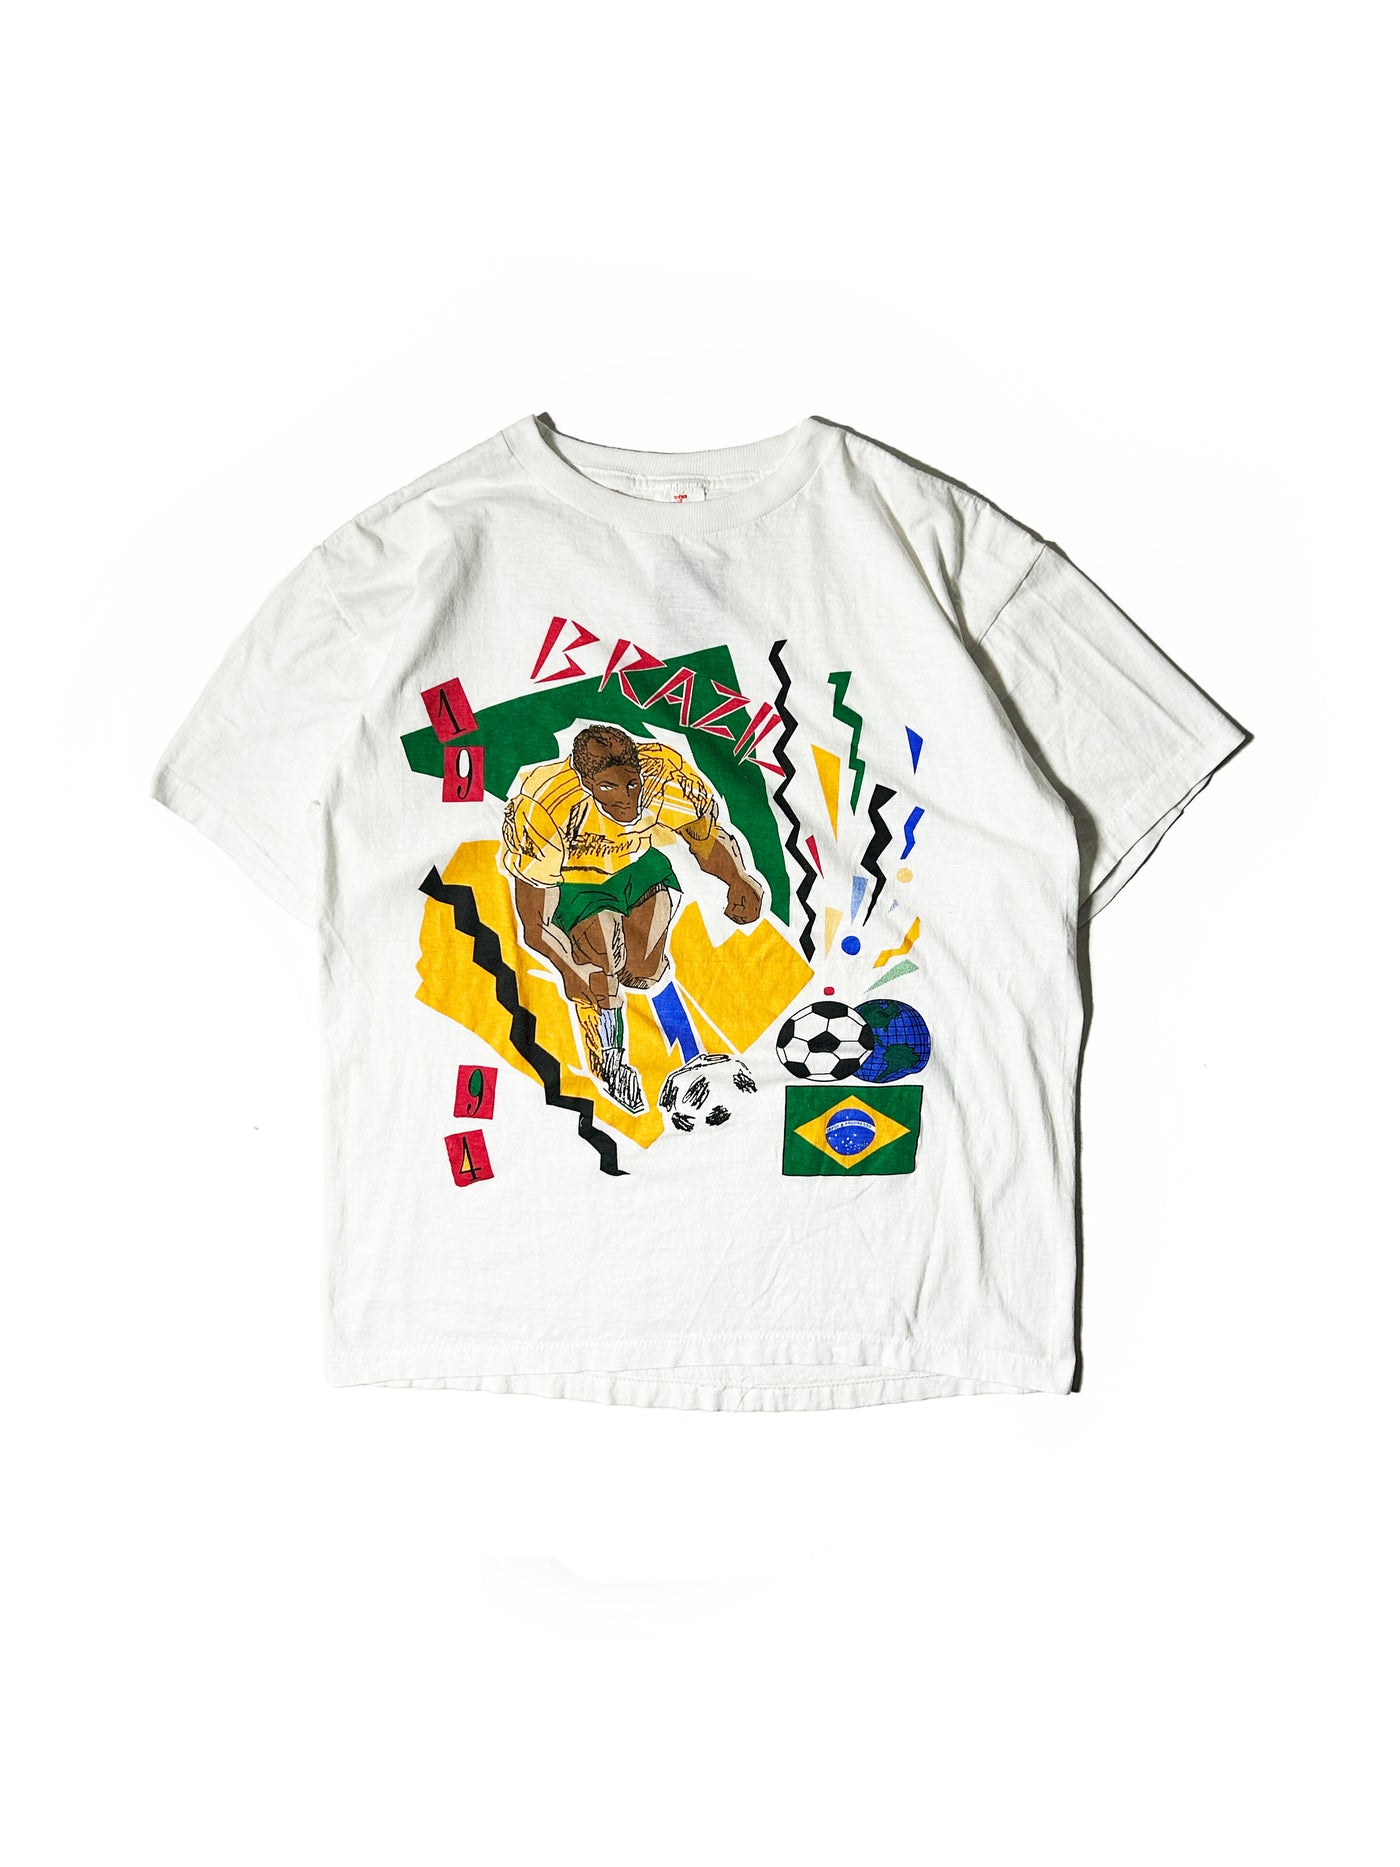 Vintage 1994 Brazil World Cup T-Shirt